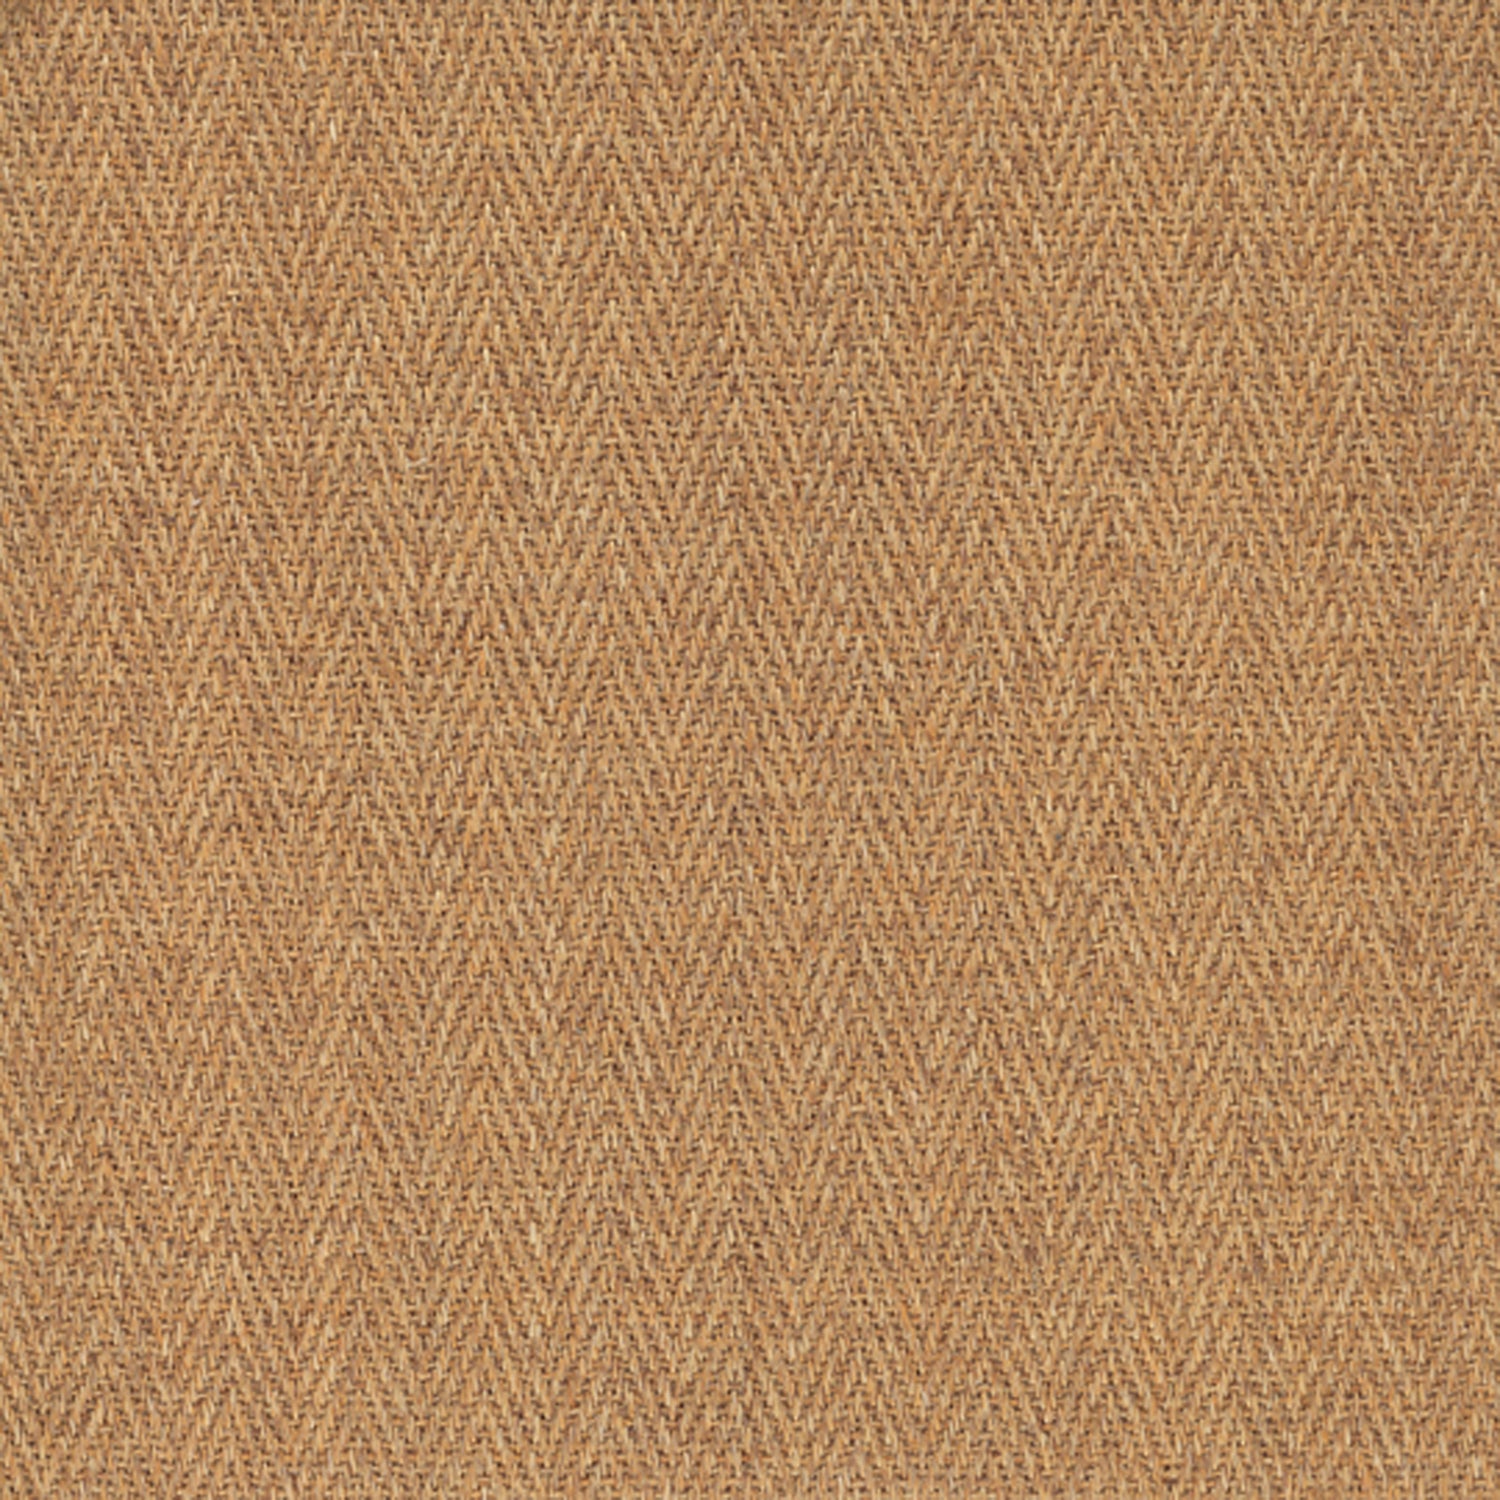 Sisal broadloom carpet swatch in a herringbone flat weave in bronze.